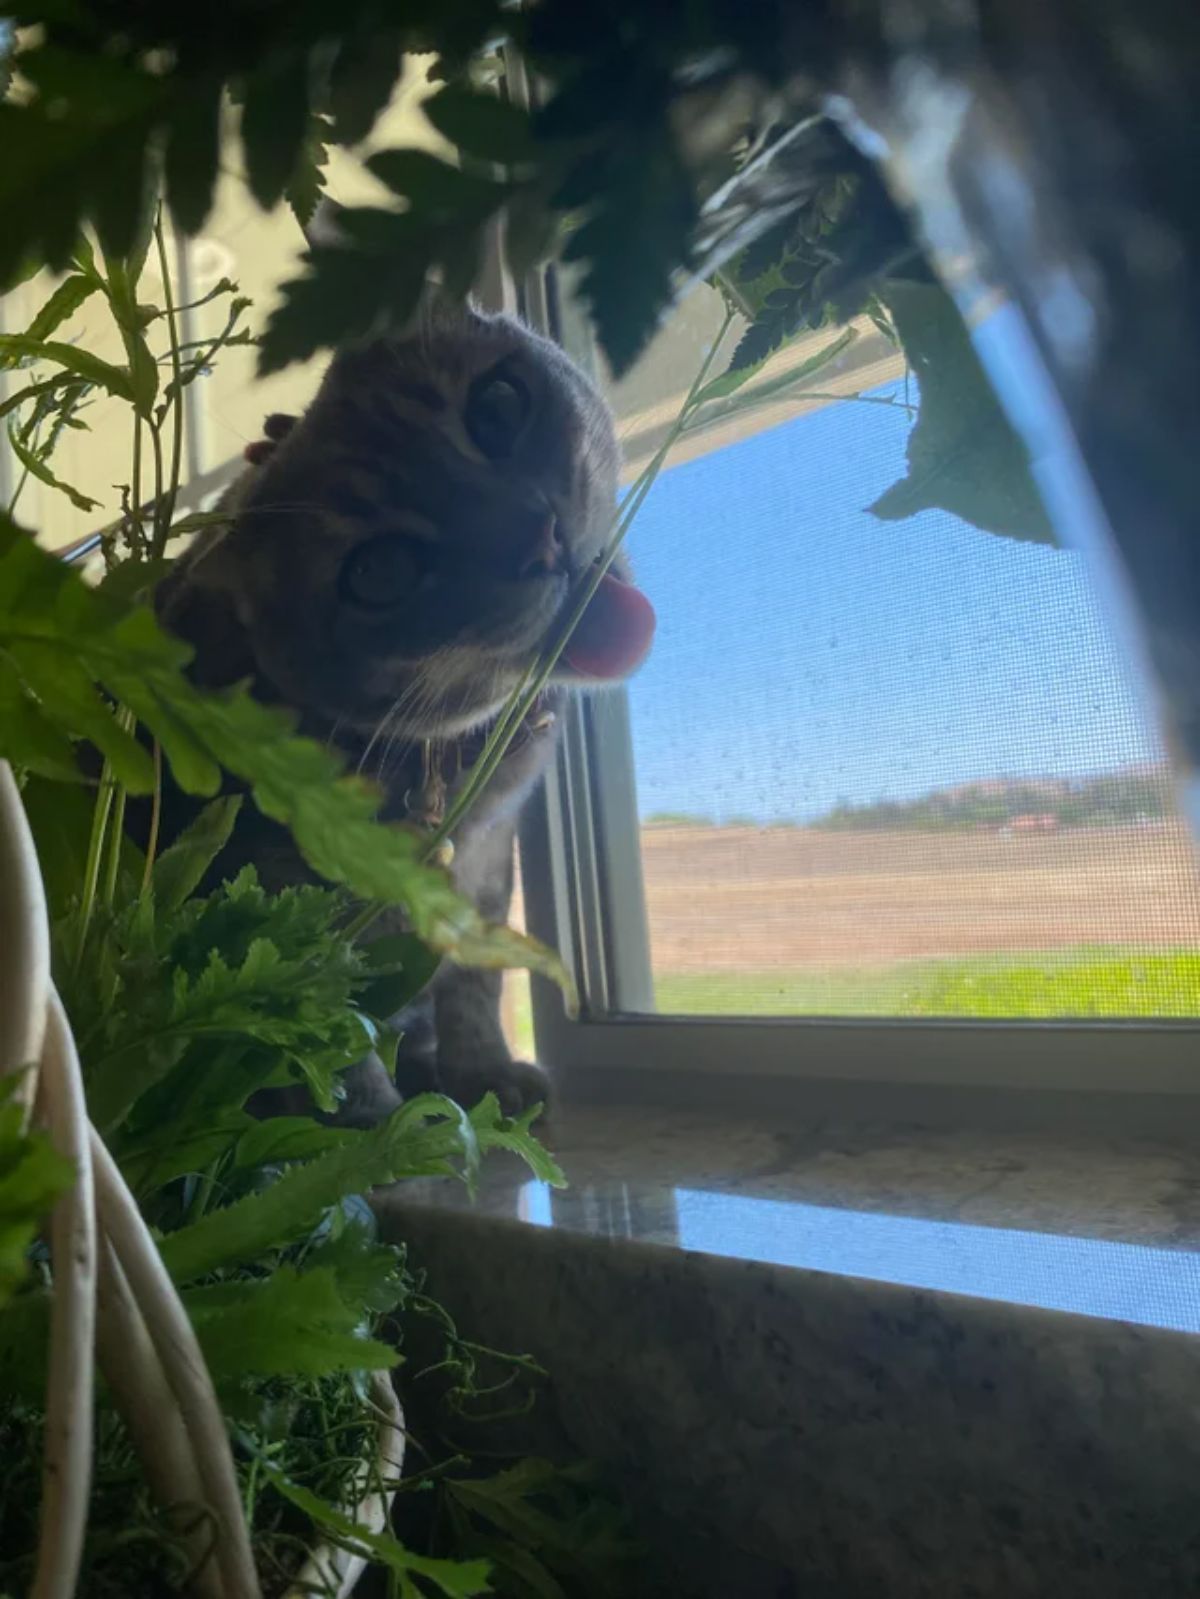 grey tabby cat licking a plant near a window